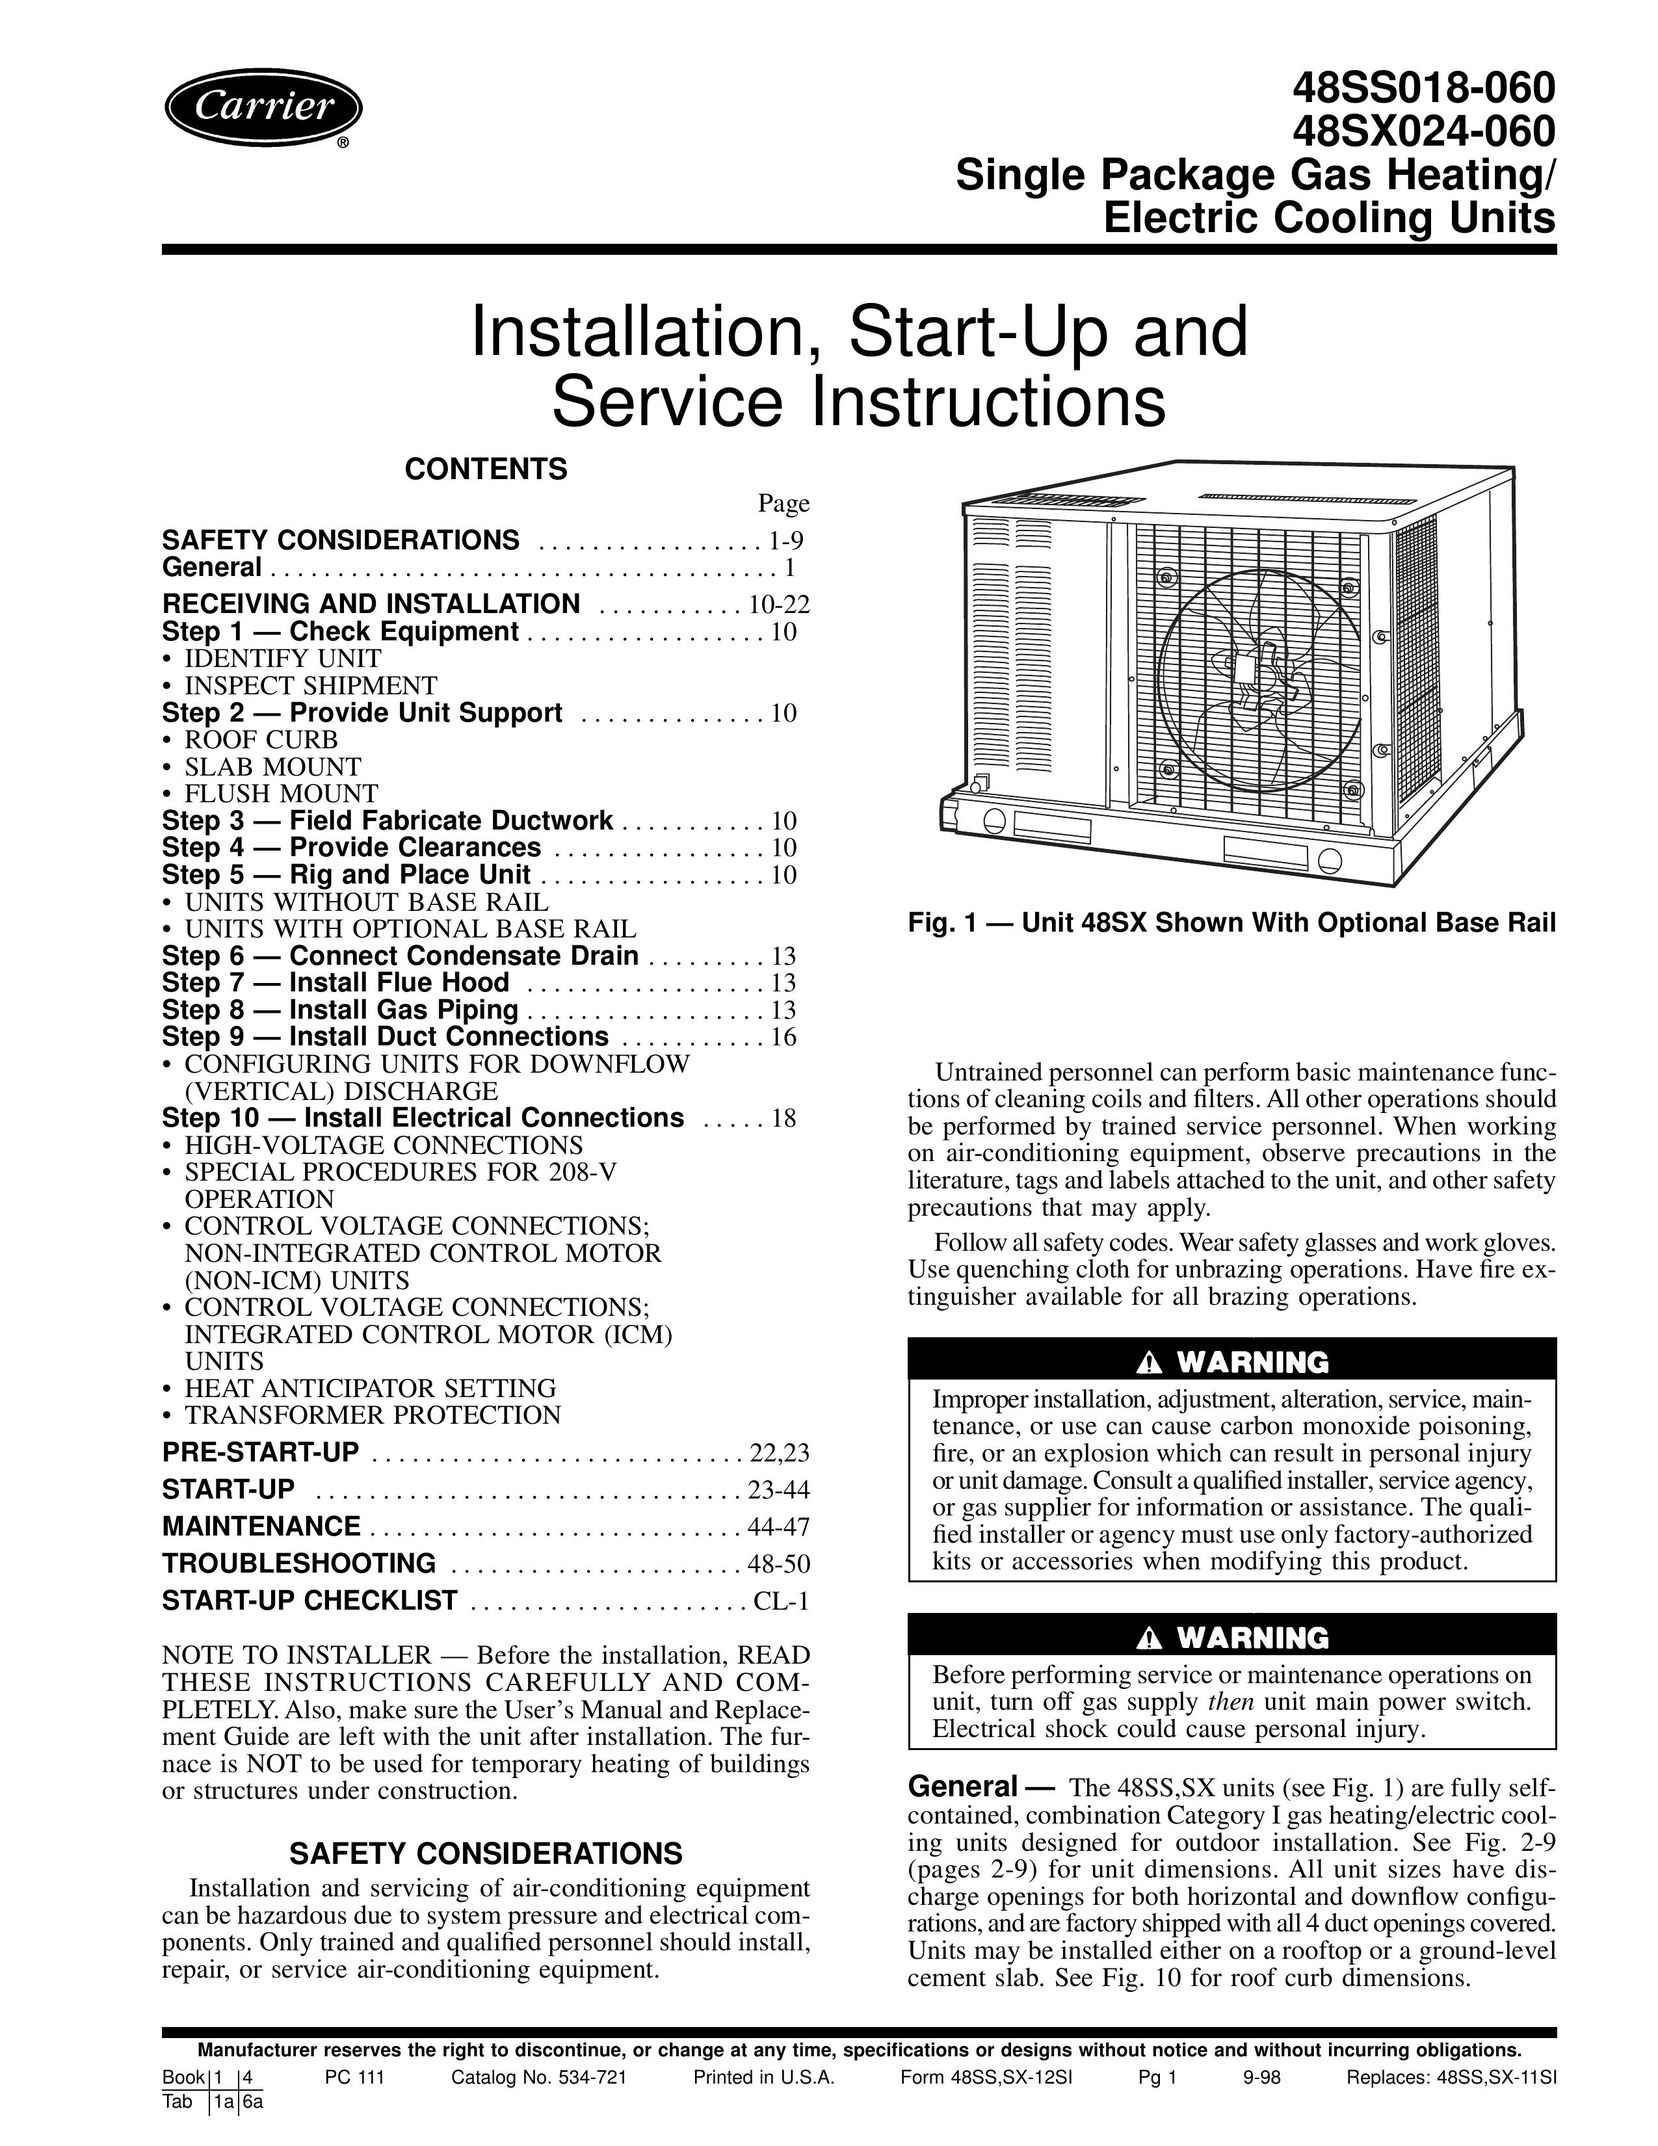 Carrier 48SX024-060 Gas Heater User Manual